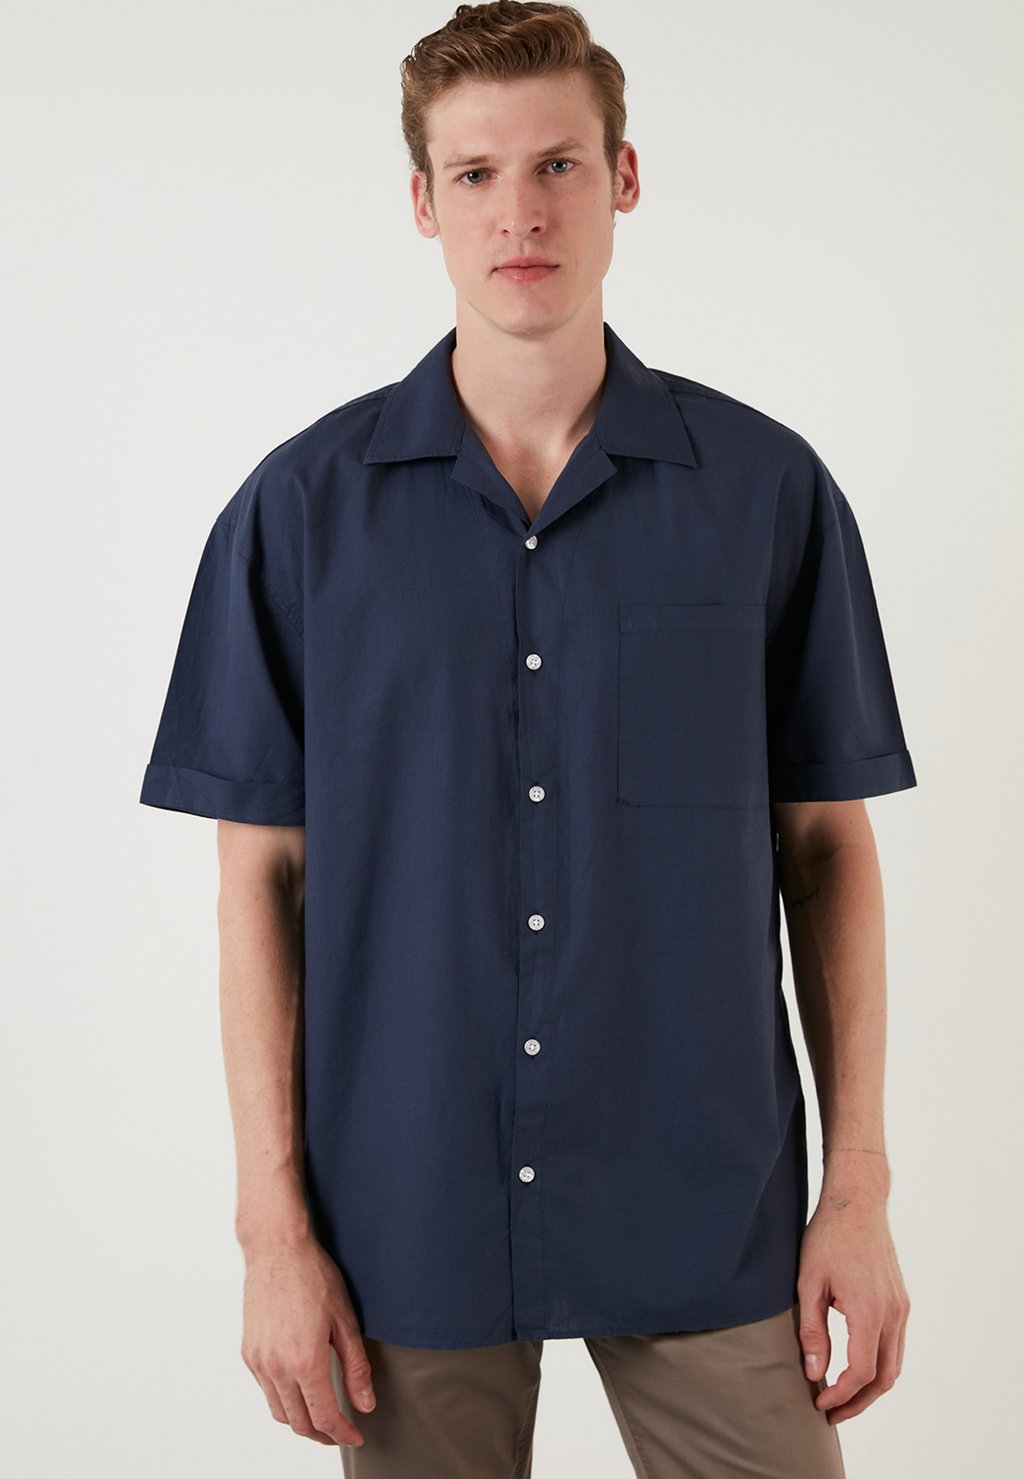 Рубашка REGULAR FIT Buratti, темно-синий рубашка olymp regular fit темно синий